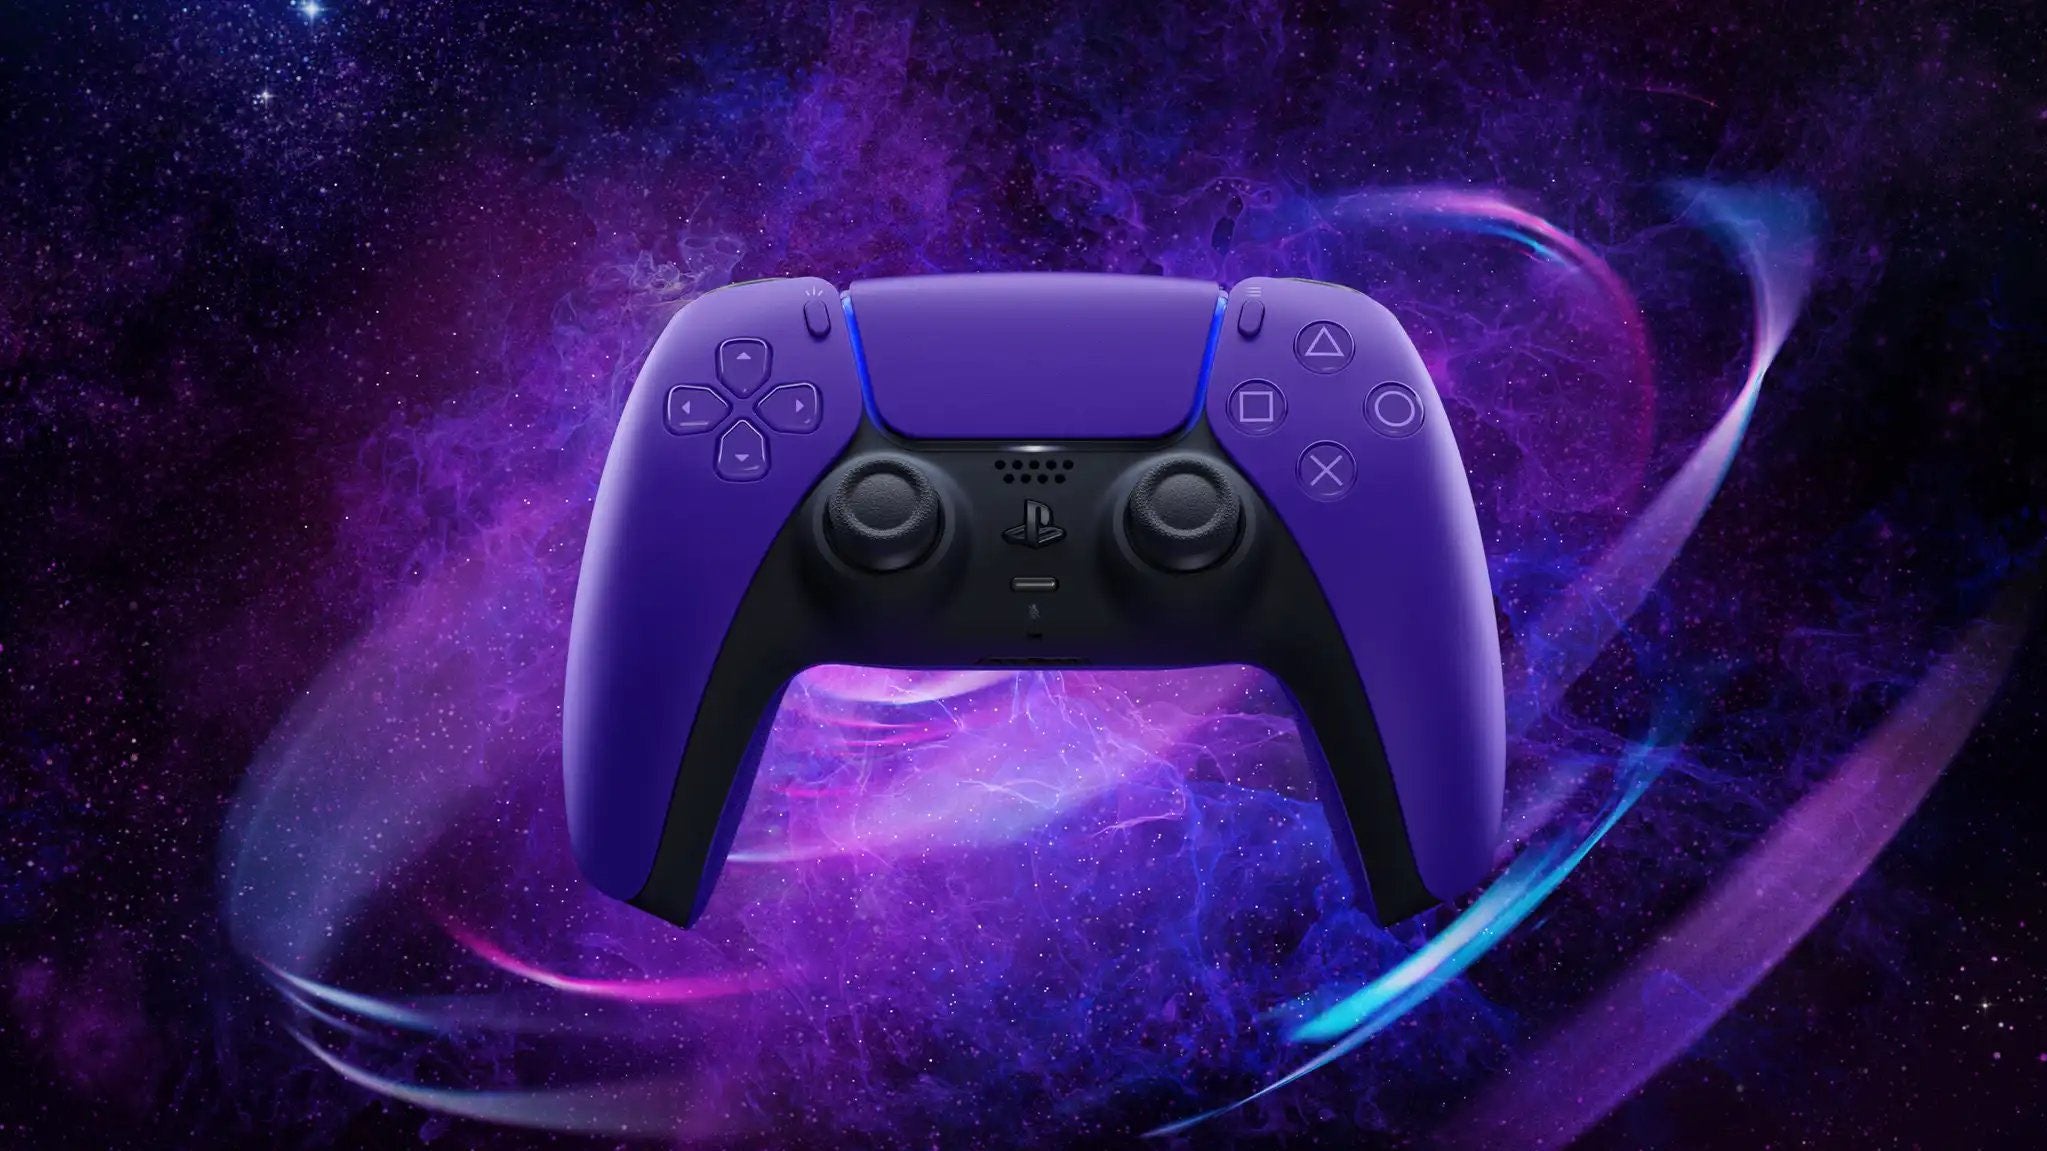 Controller PS5 Dualsense Wireless Galactic Purple - Albagame